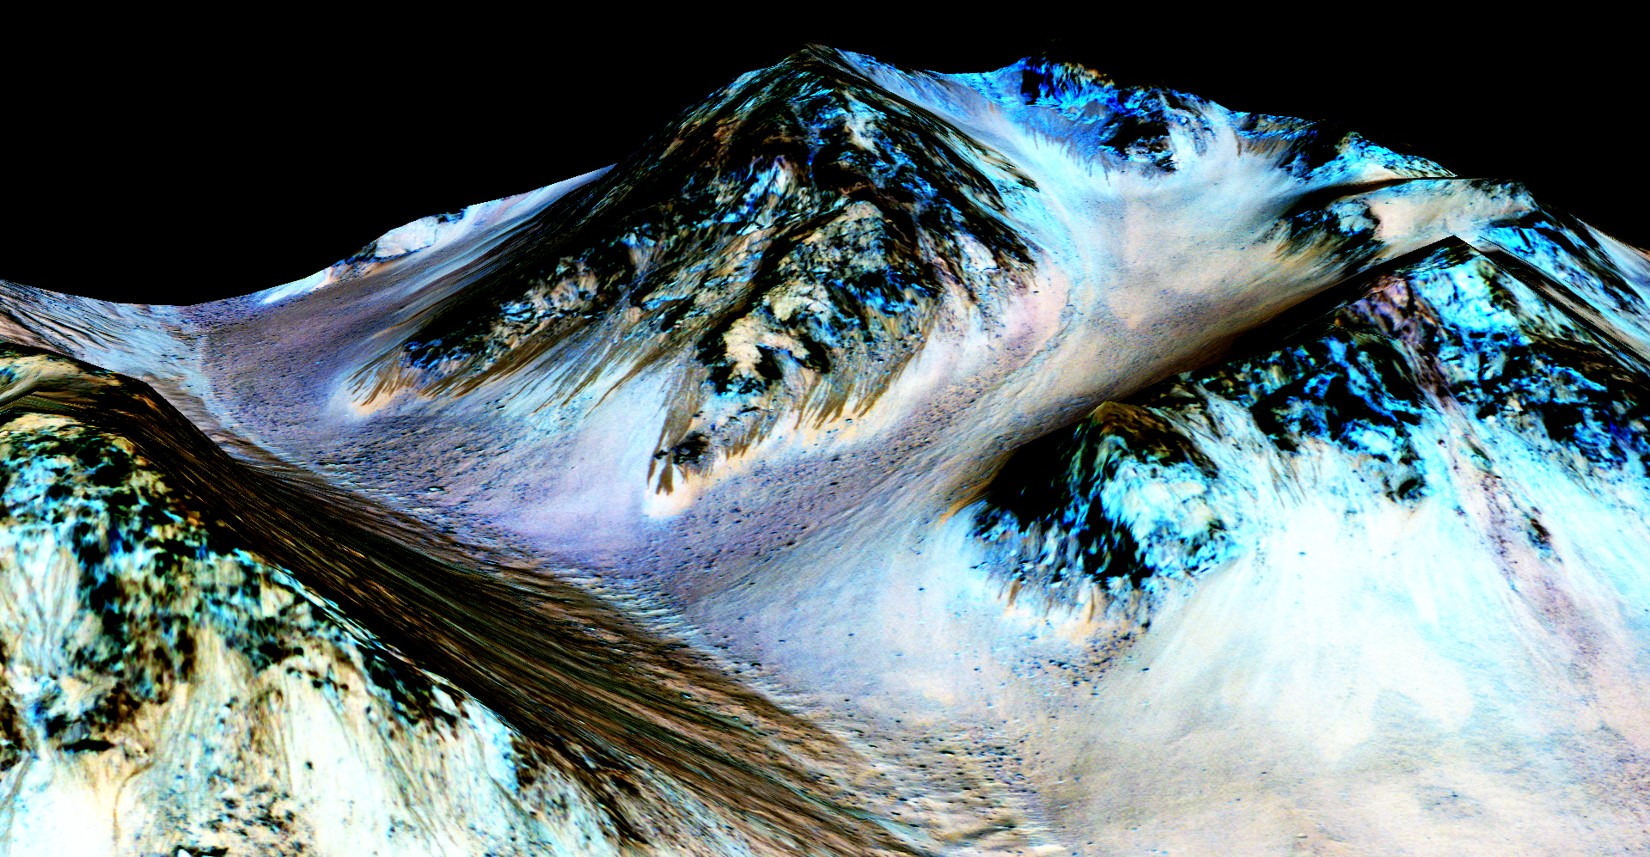 This Week on Mars: NASA Confirms Flowing Water